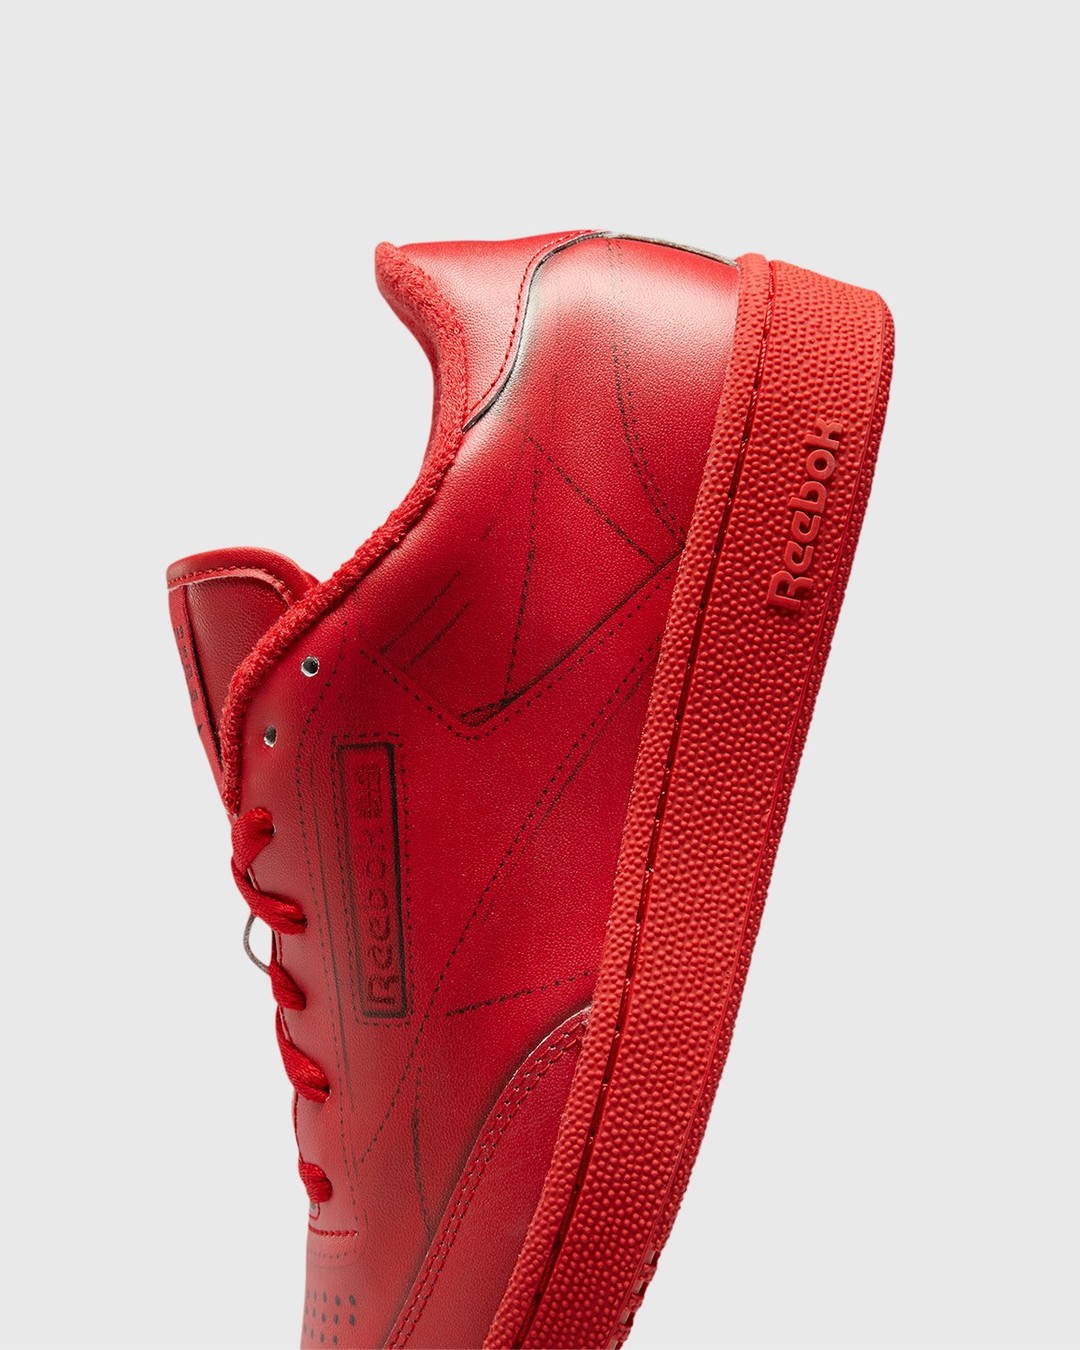 Maison Margiela x Reebok – Club C Trompe L’Oeil Red - Sneakers - Red - Image 7